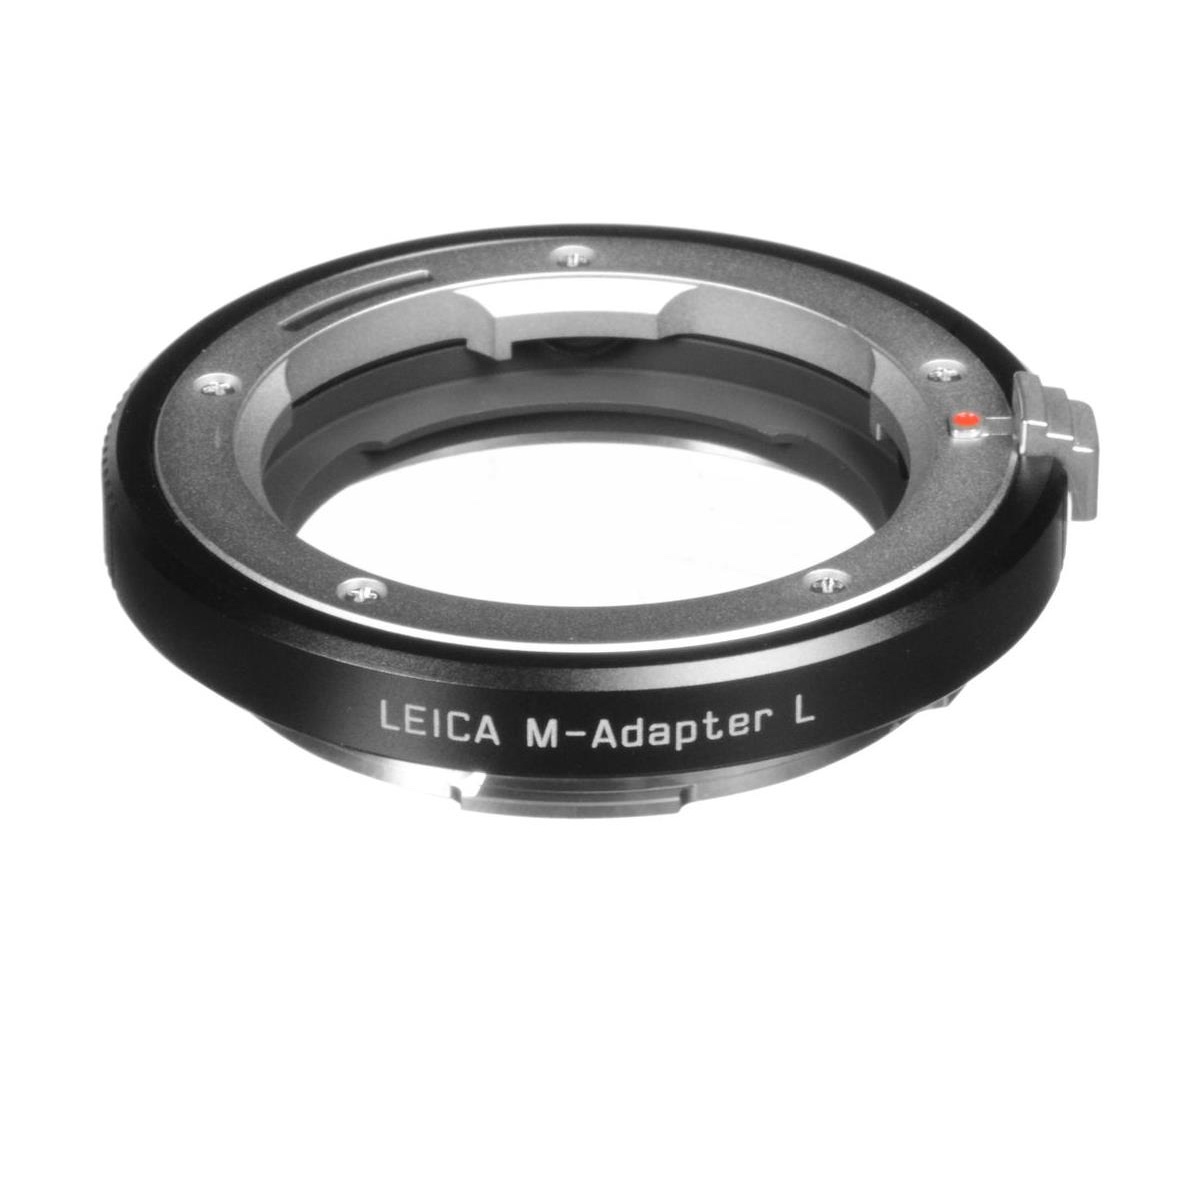 Leica M-Adapter L